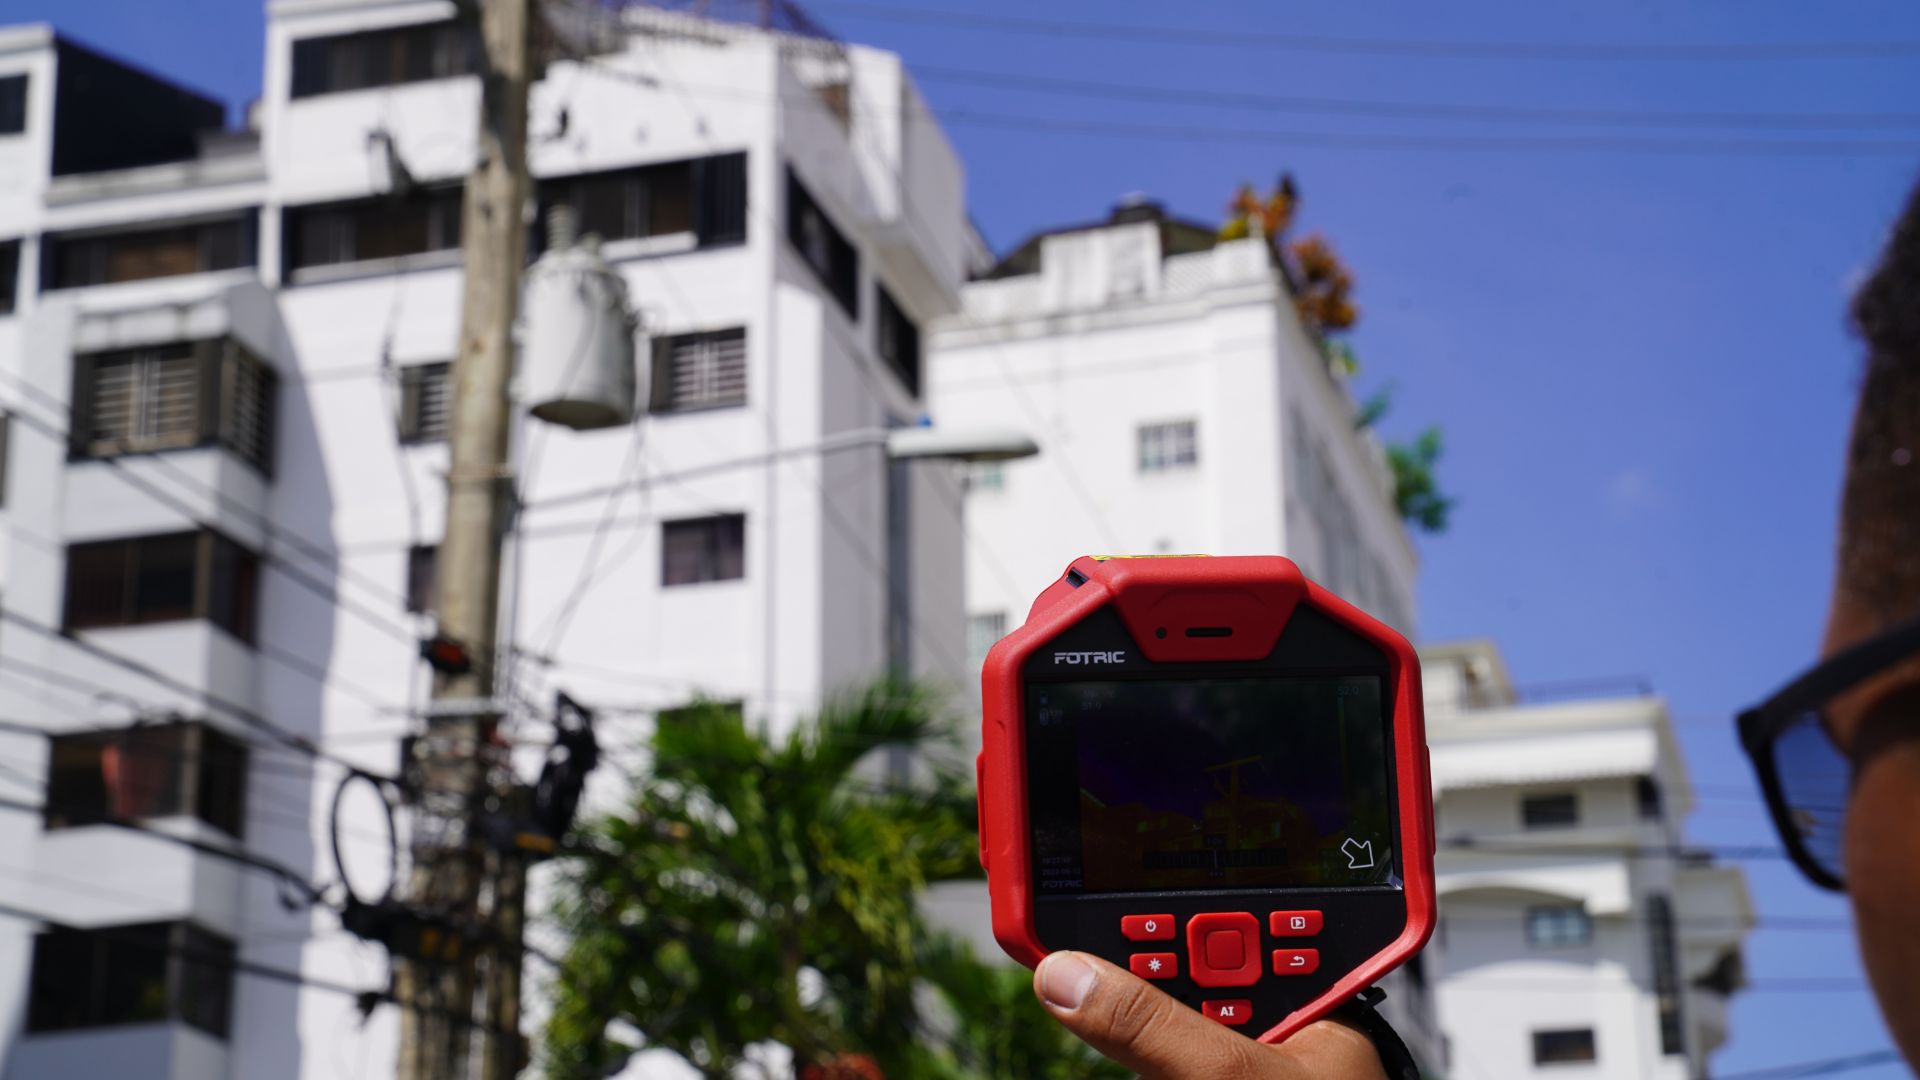 Edesur adquiere cámaras termográficas para detectar fallas en redes y disminuir averías